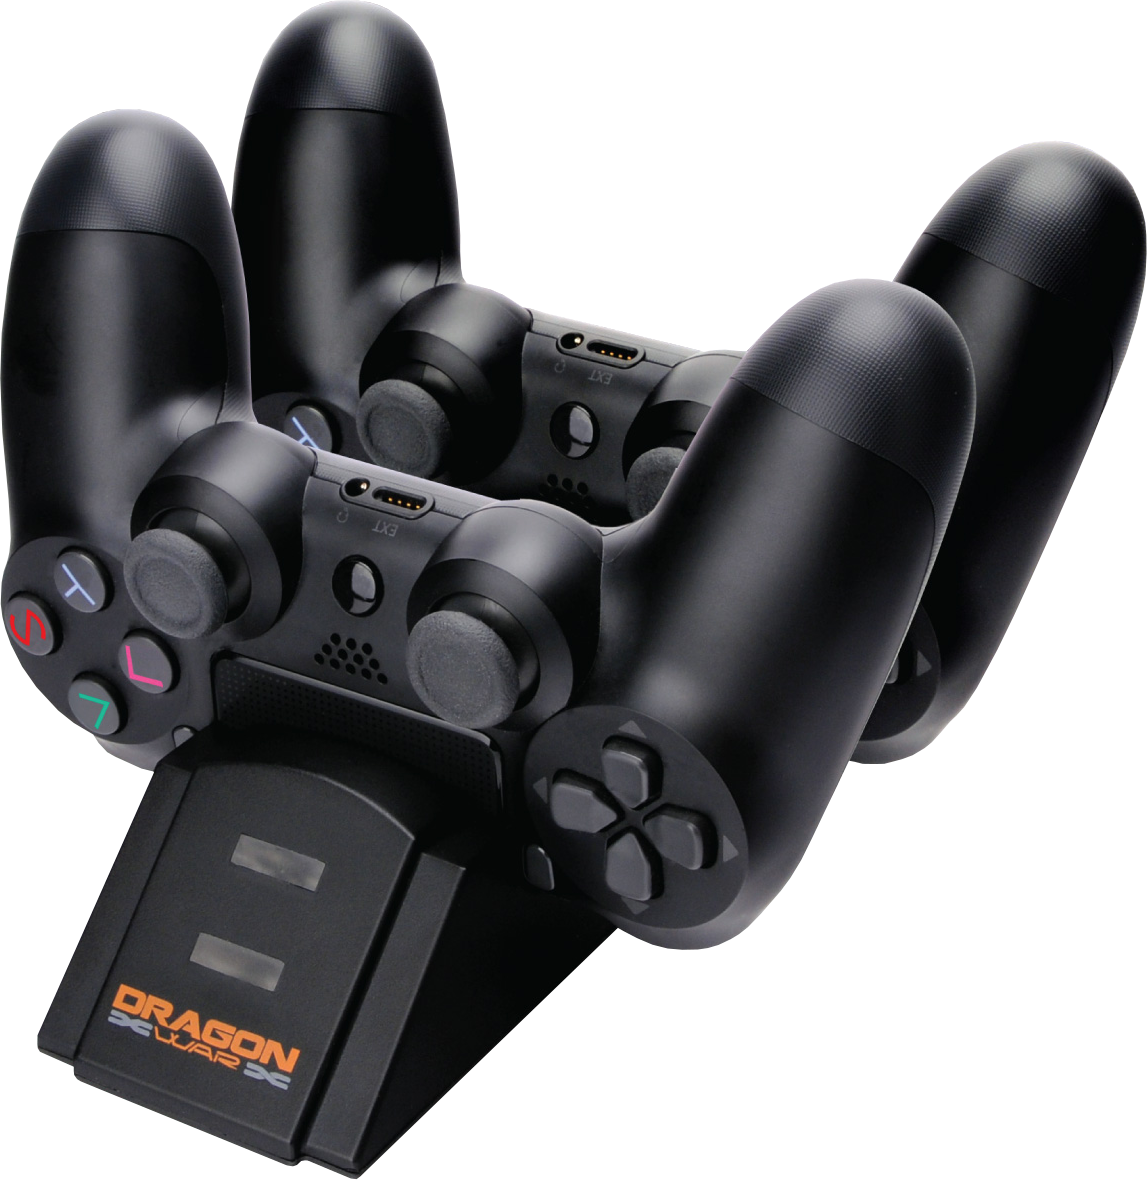 Dragonwar PS4 Dual Charging Dock pour Playstation 4 Dualshock manette, controller